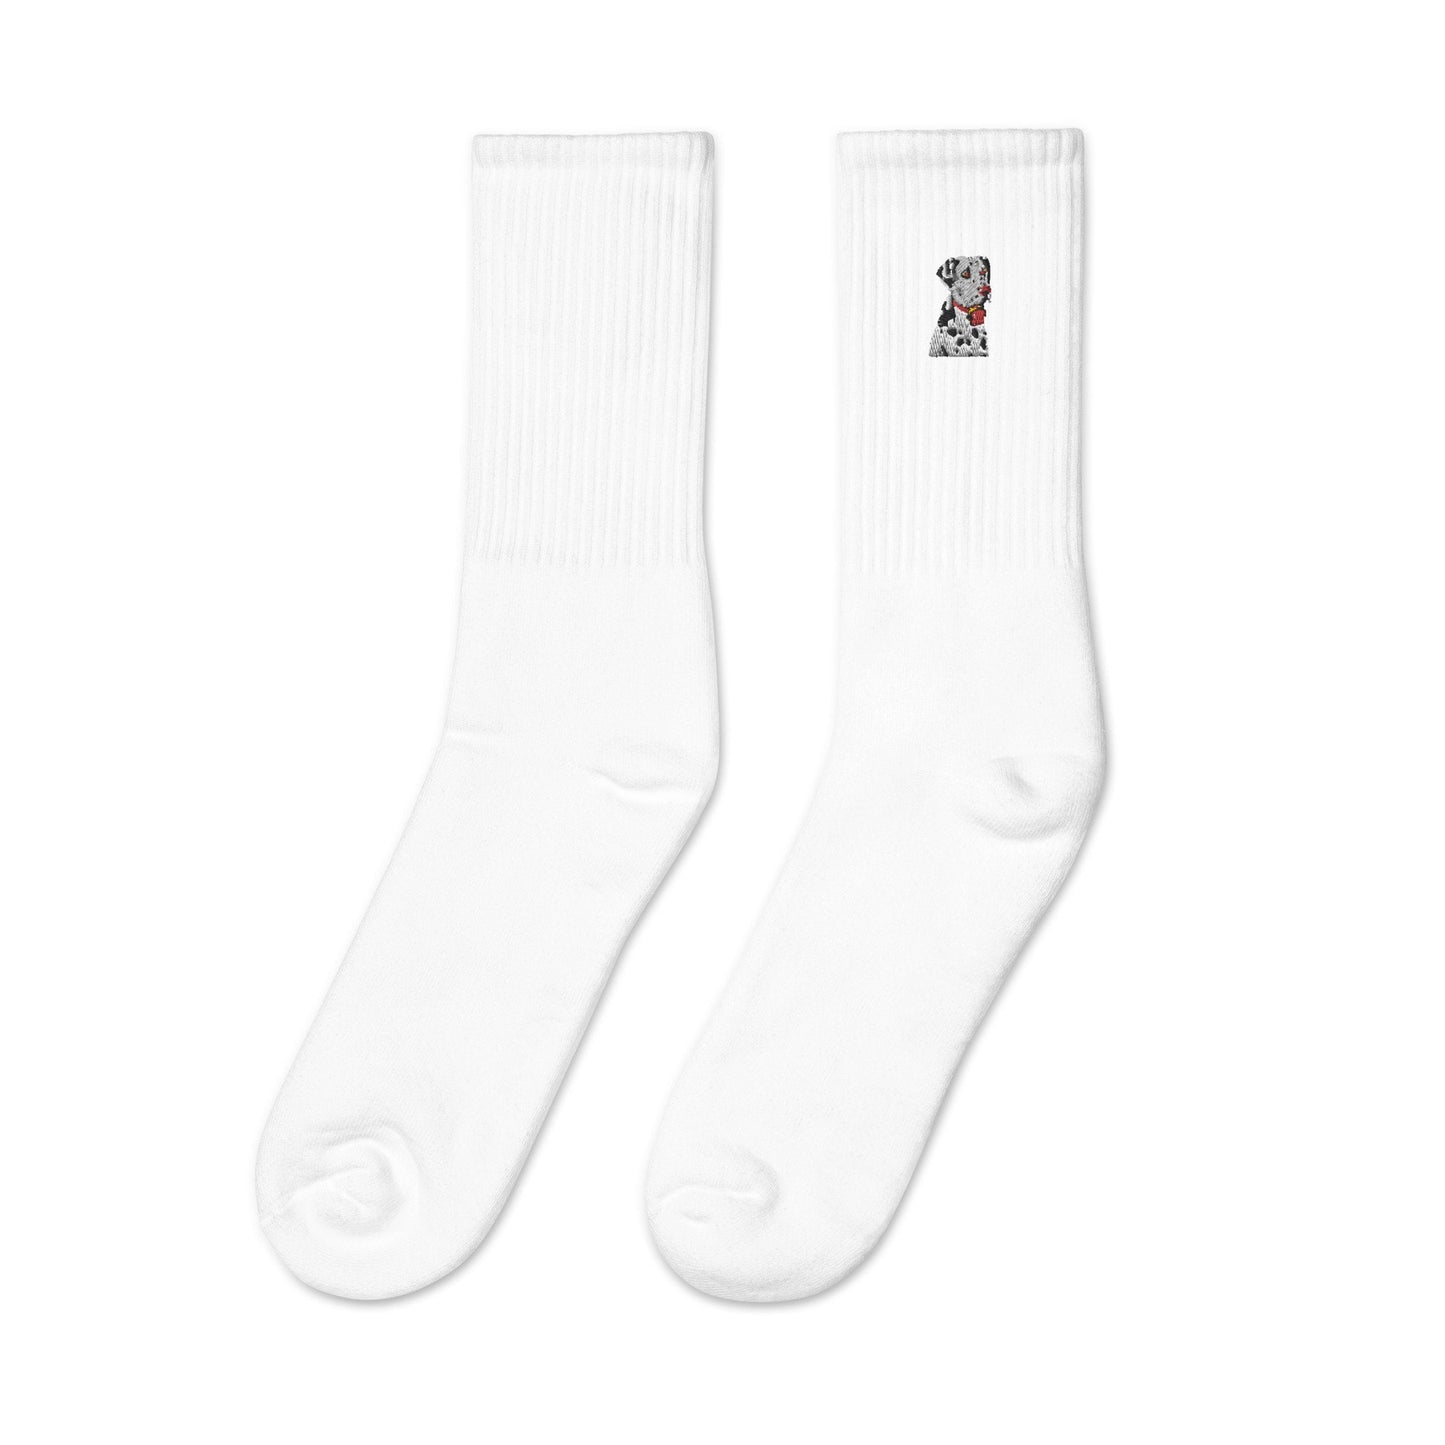 Dalmatian Embroidered Socks